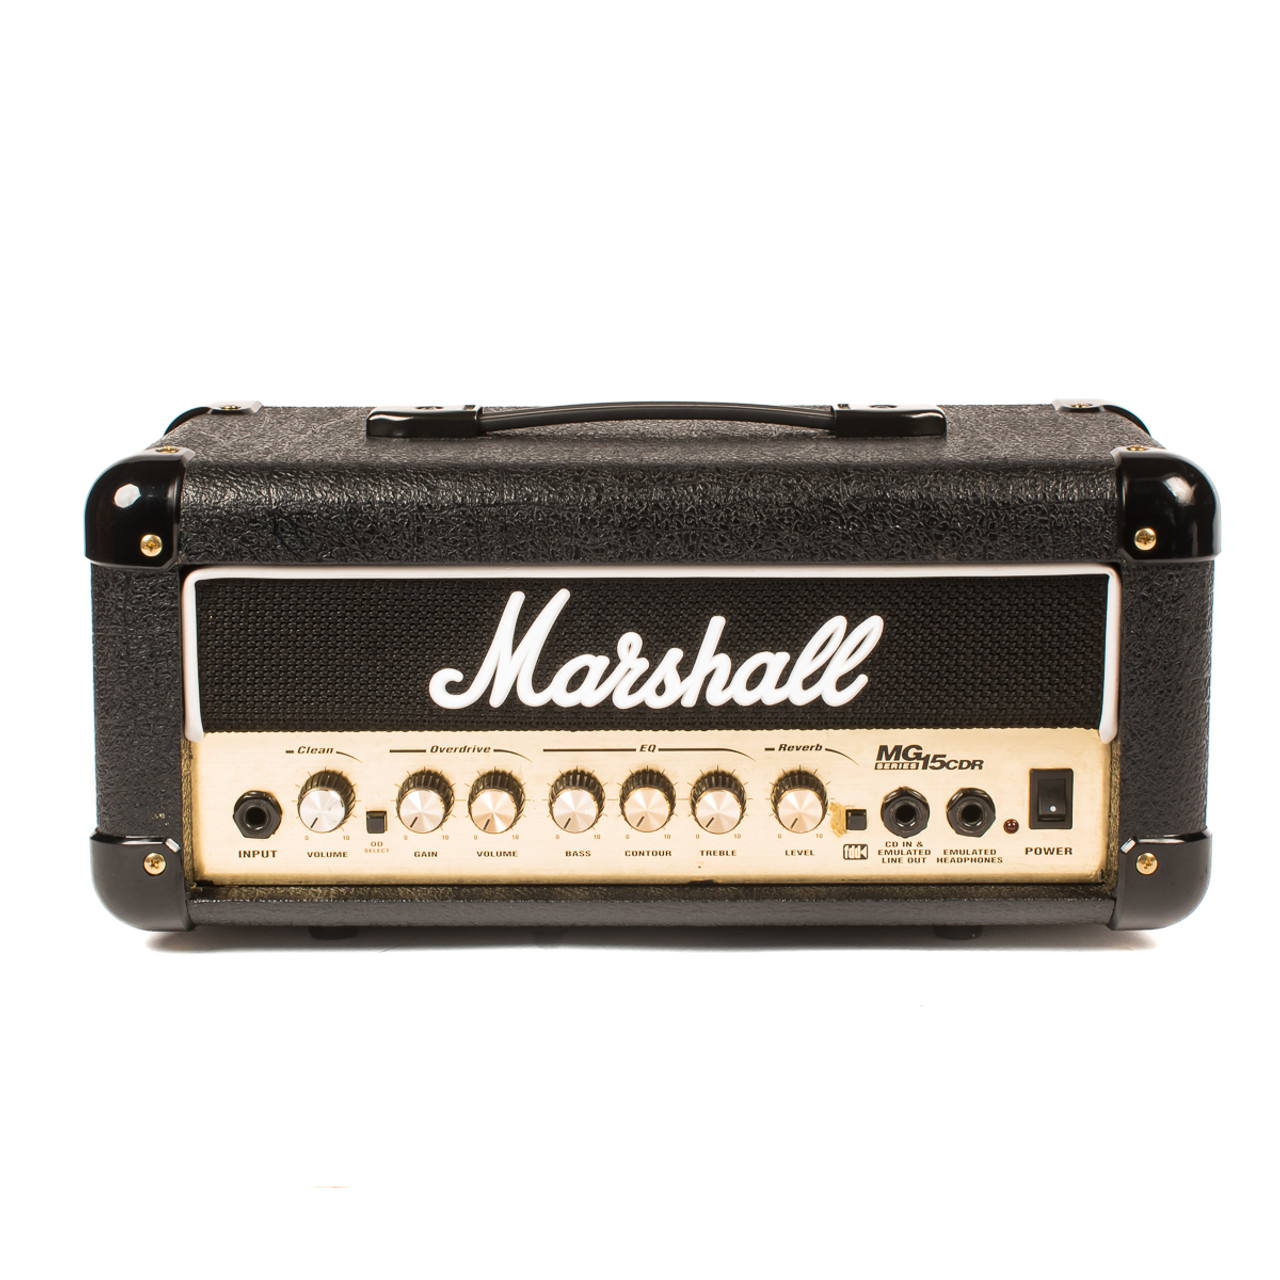 Marshall - MG15CDR - 15 Watt Solid State Guitar Amp Head - x436U